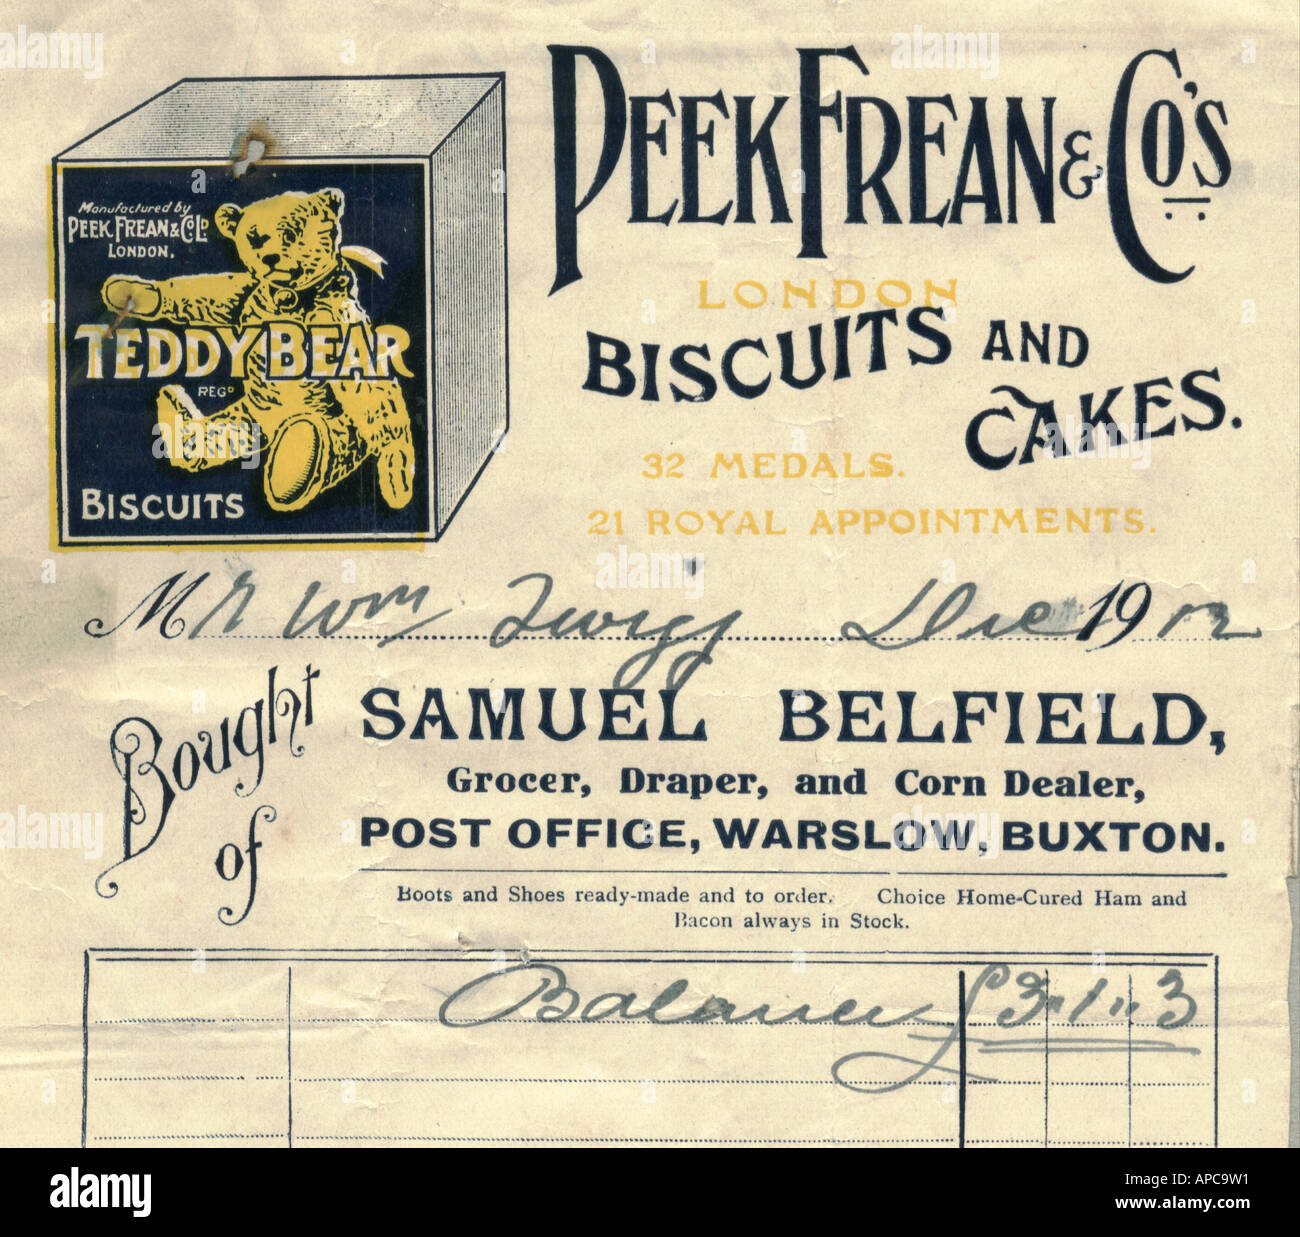 Billhead Werbung Peak Frean Teddy Bear Biscuits 1912 Stockfoto